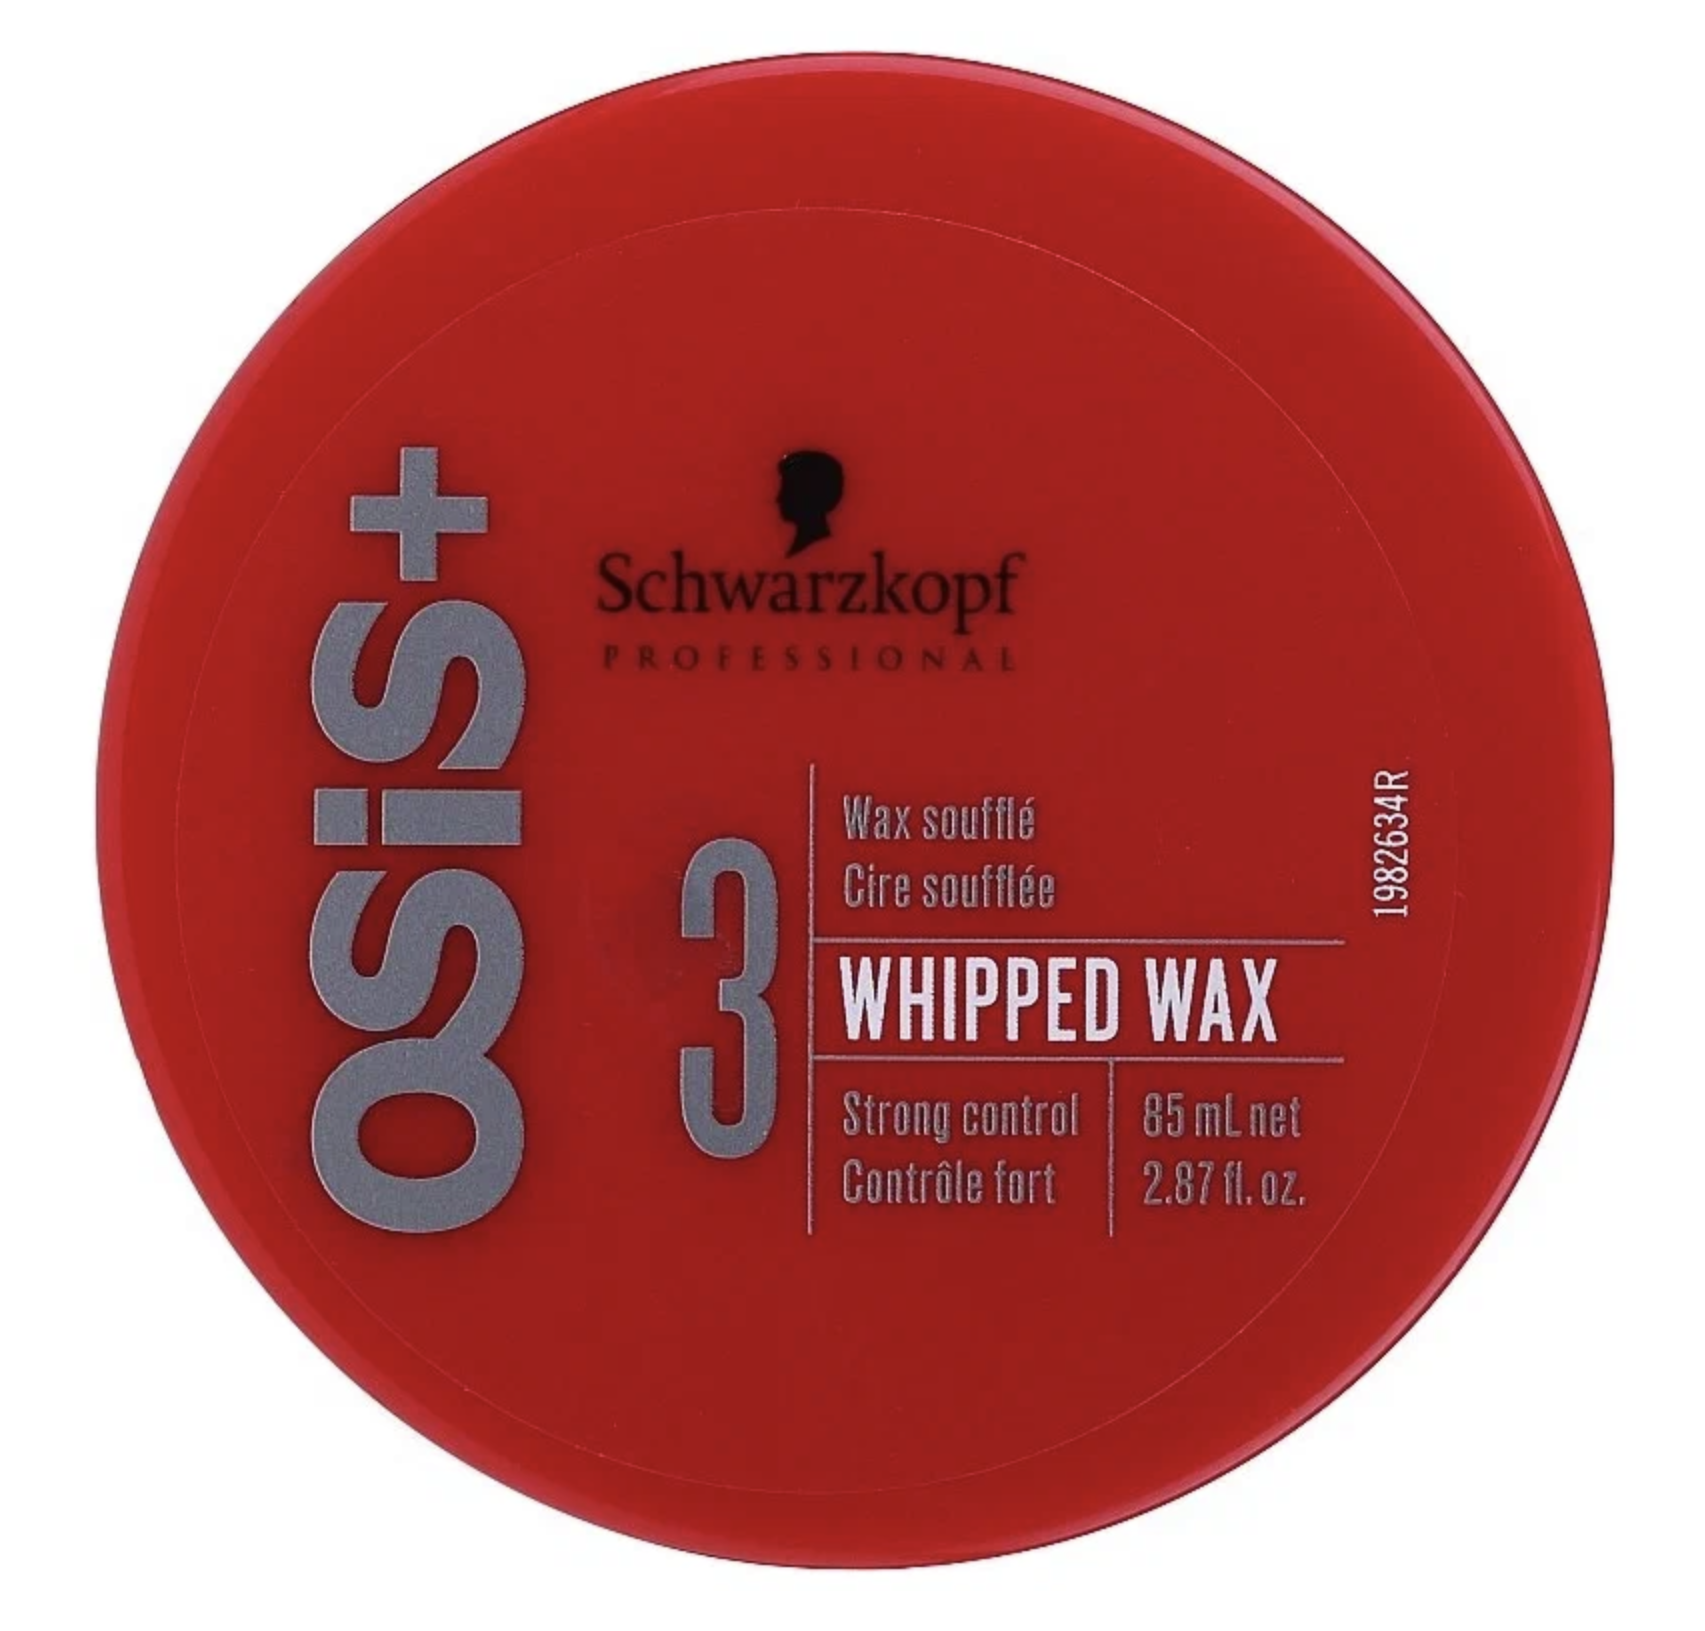   / Schwarzkopf Osis Plus - -   Whipped Wax 3   85 